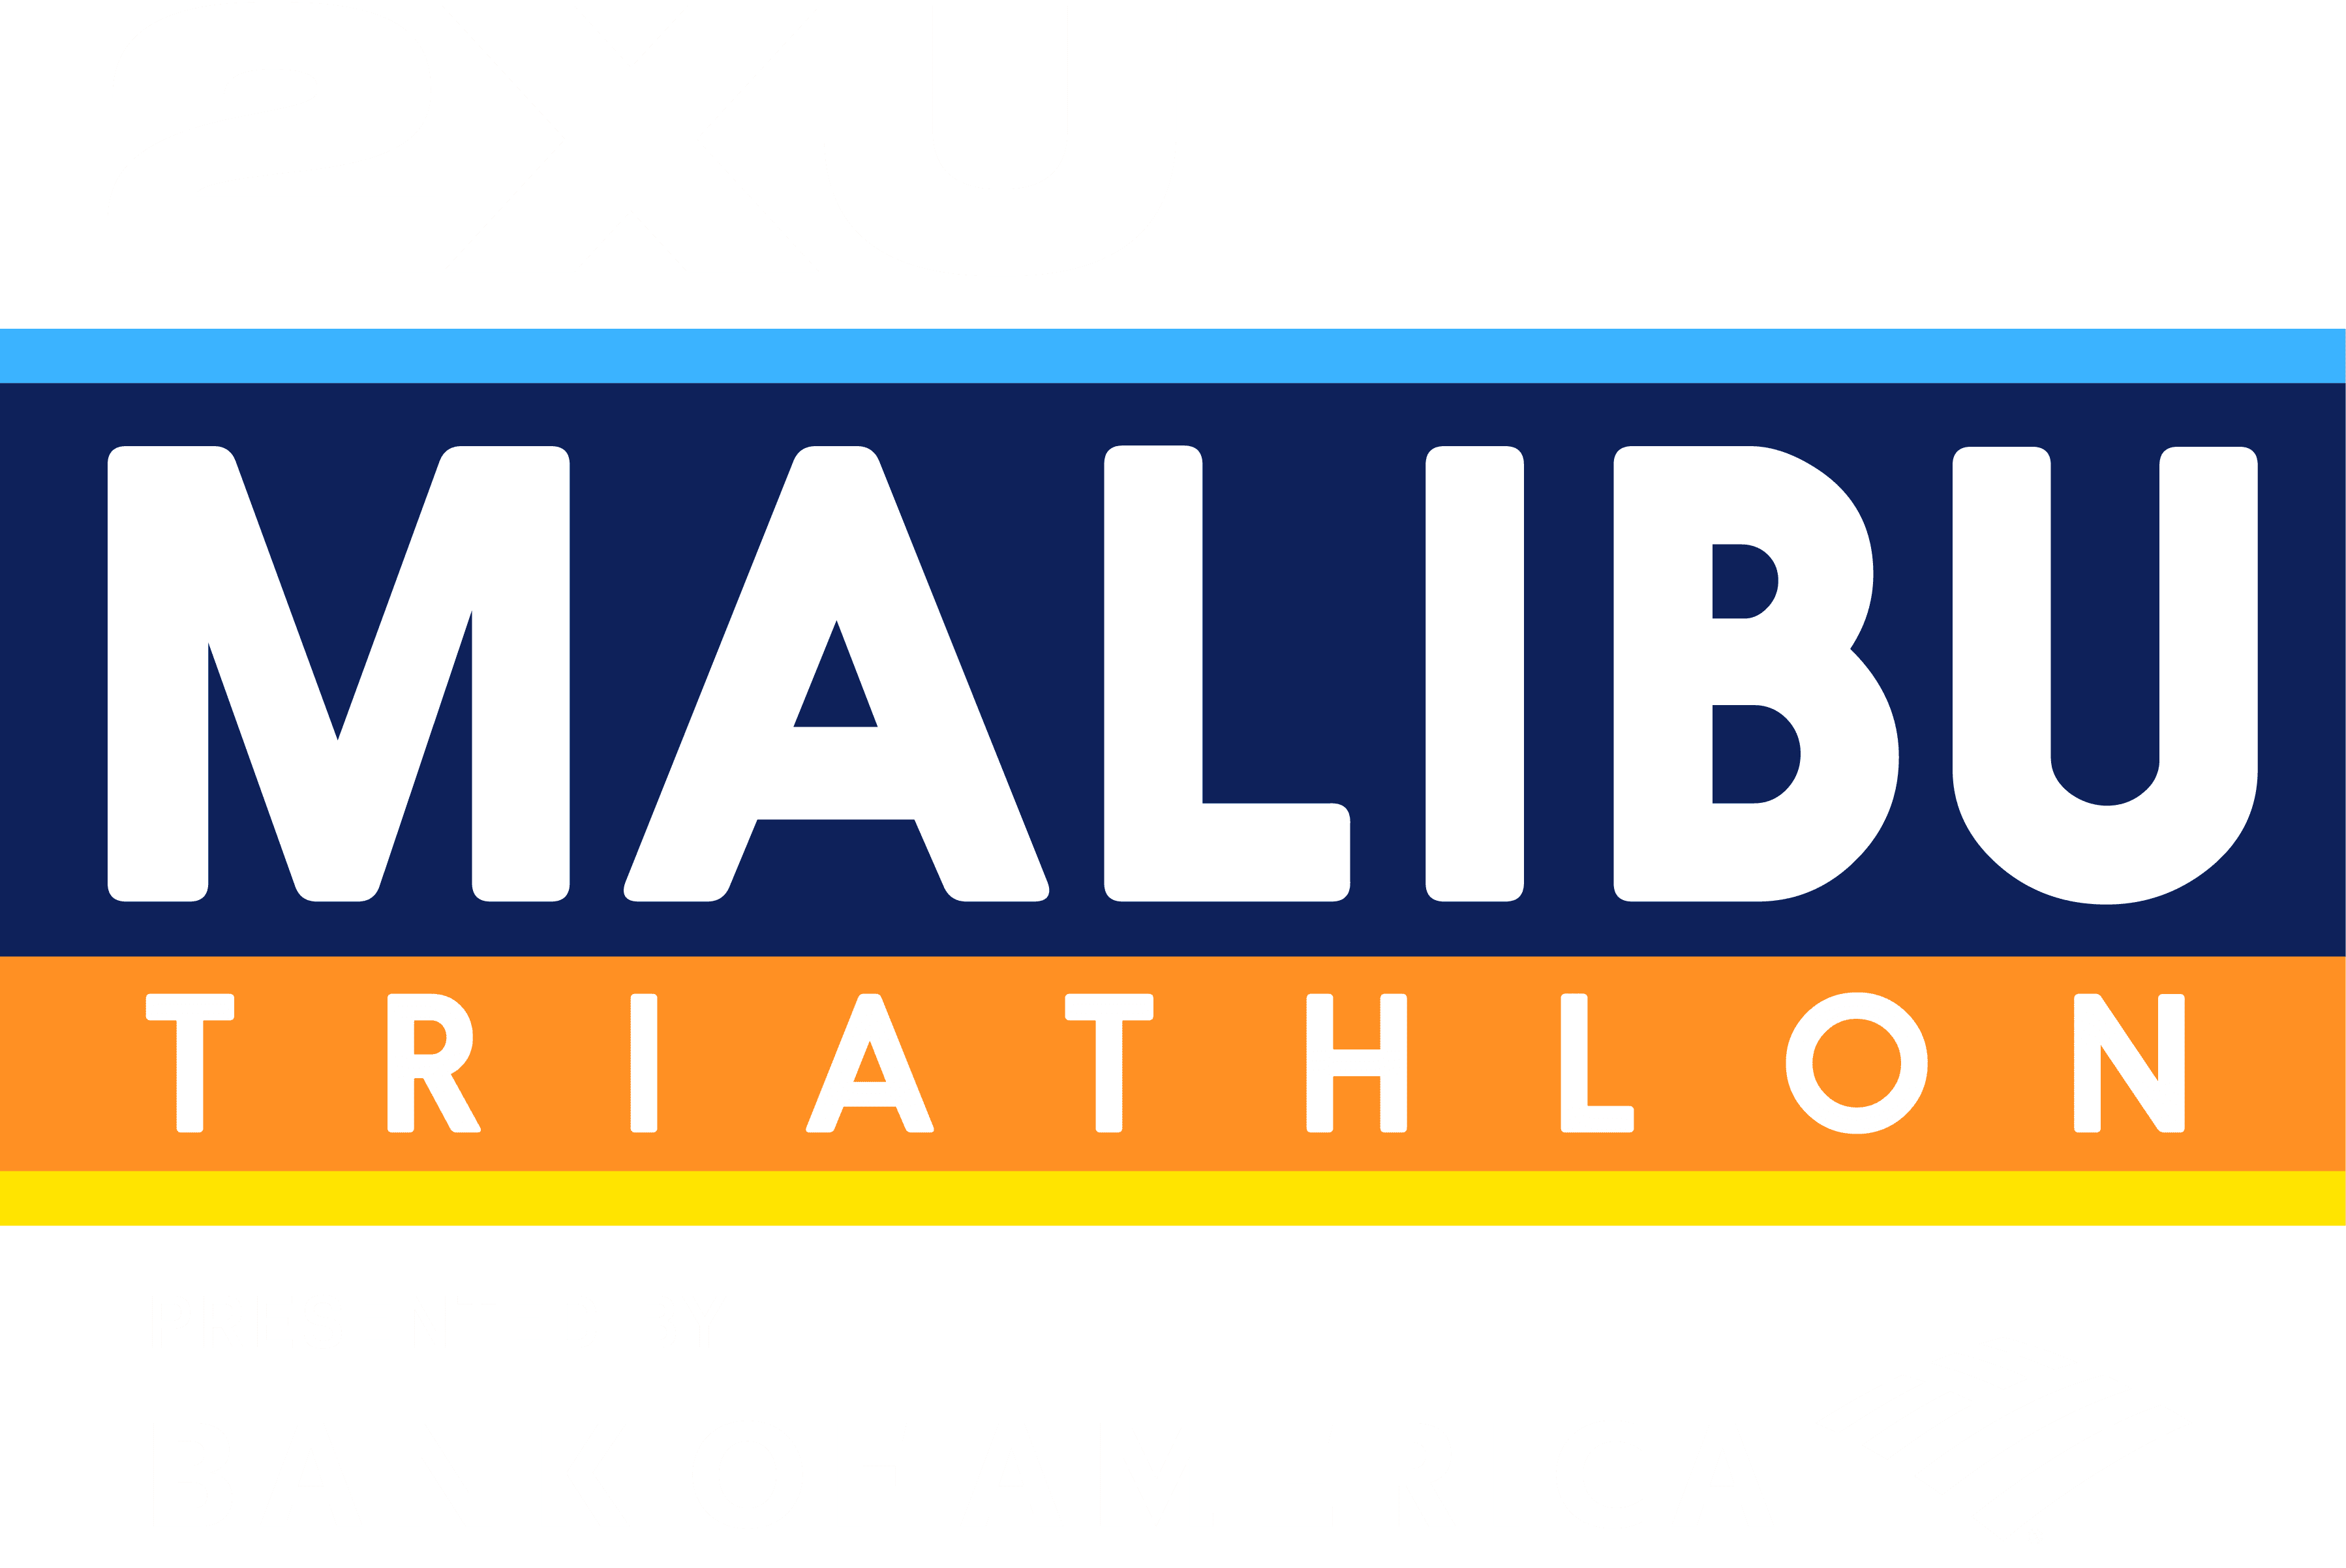 Malibu Triathlon Packet Prep volunteers needed Wednesday Friday, Sept